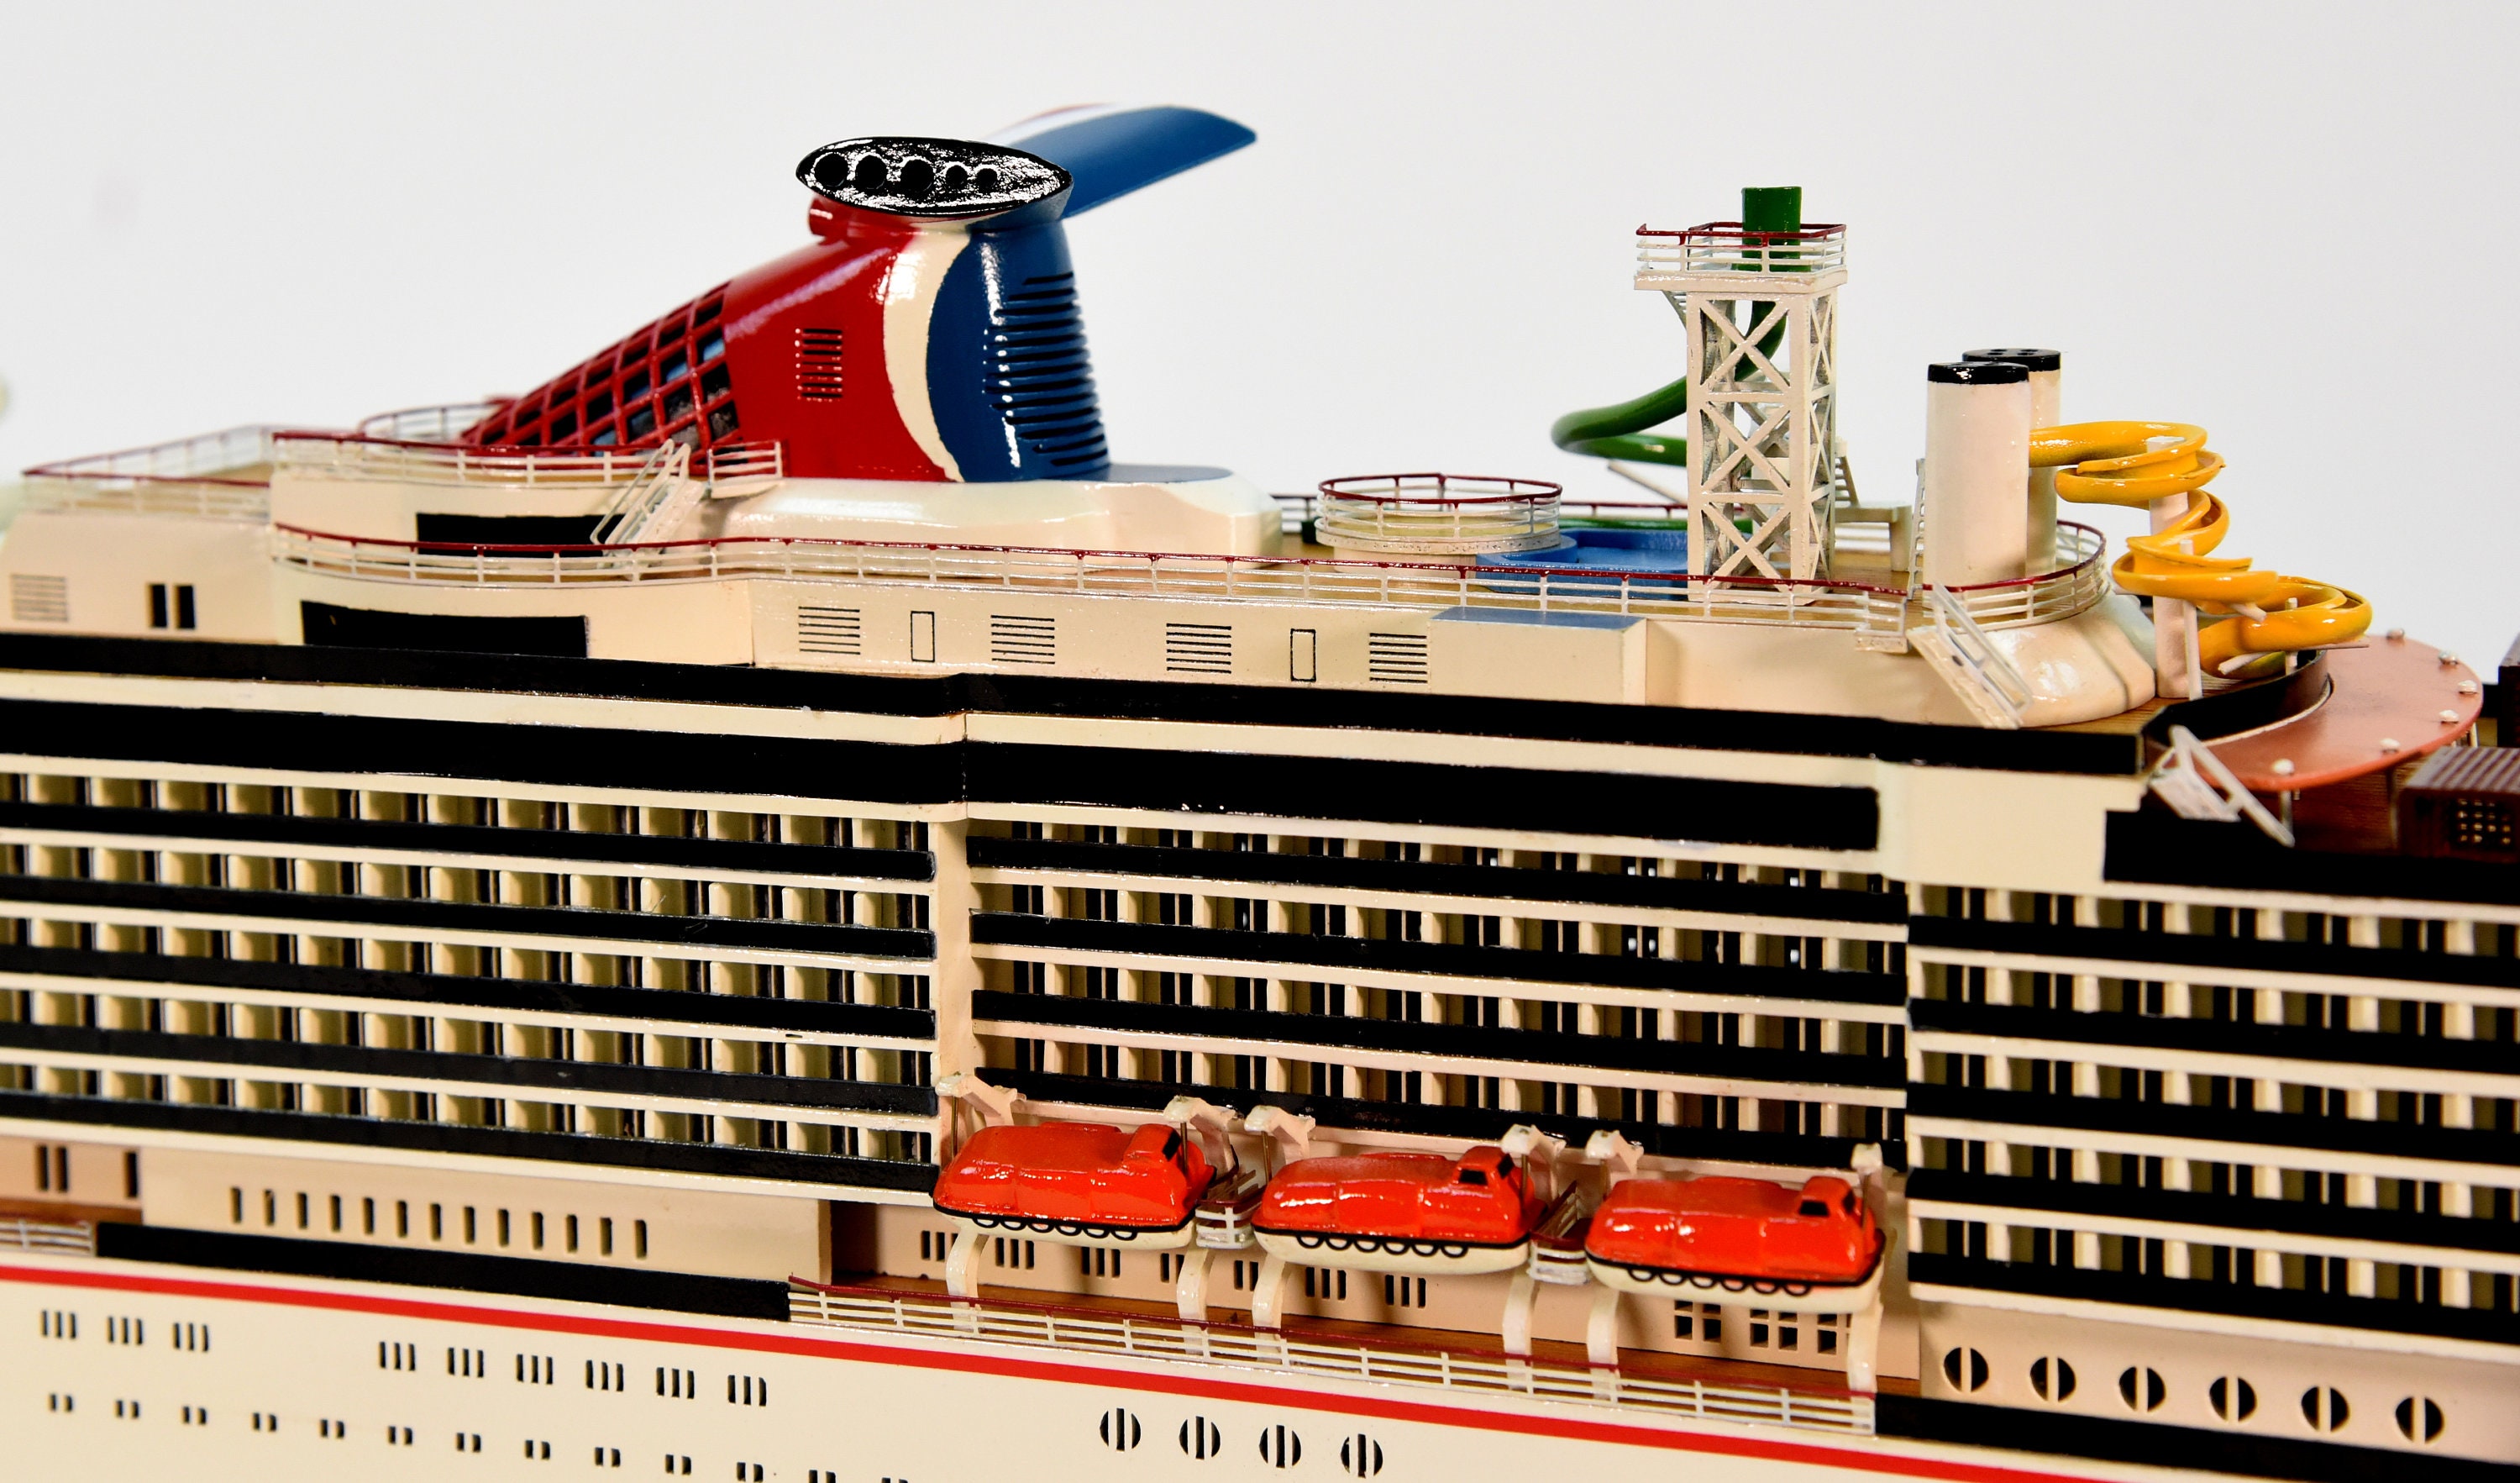 carnival cruise ship model kits